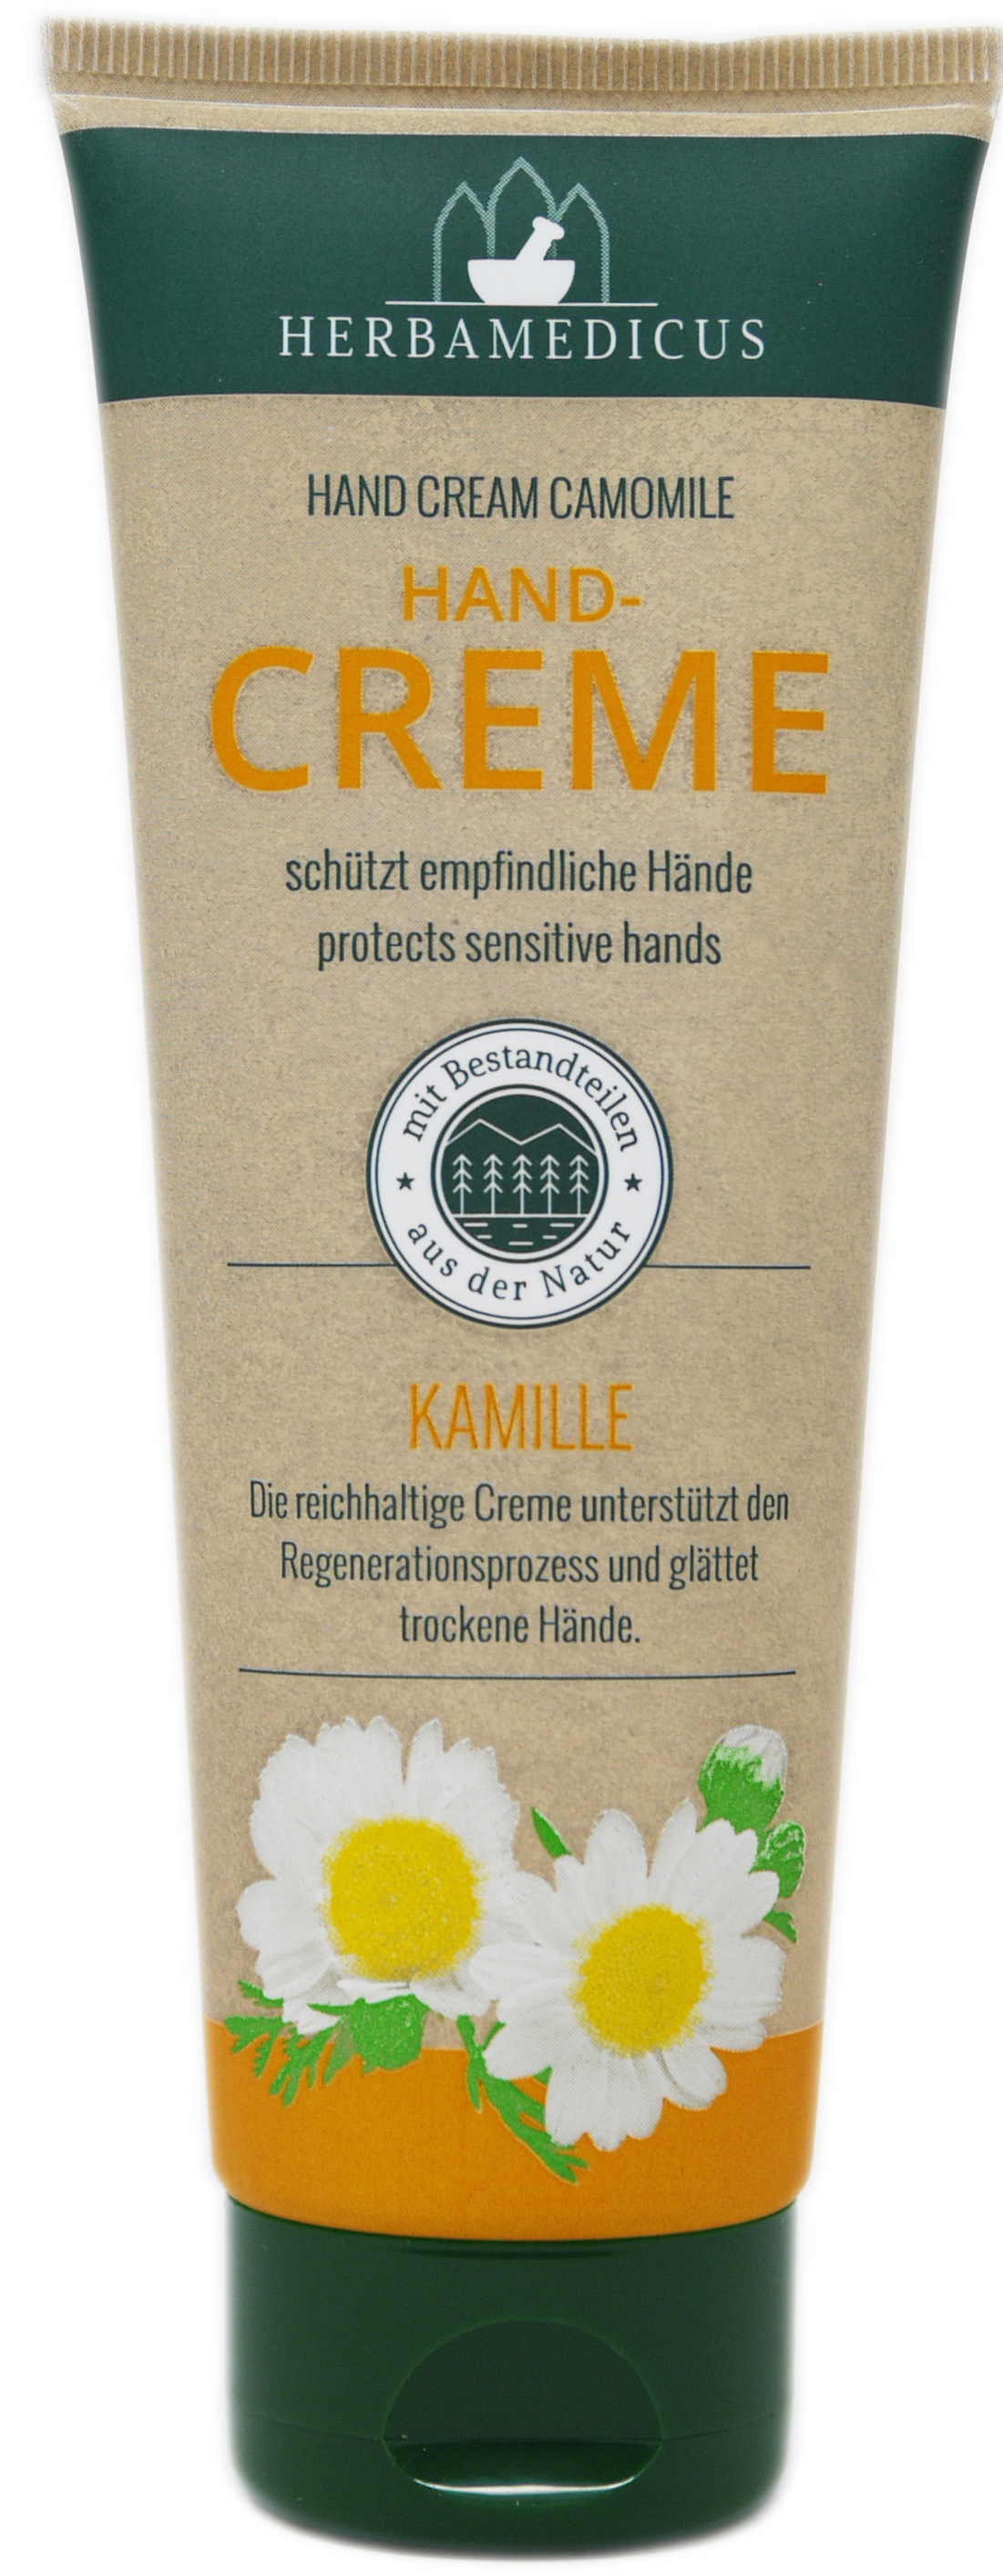 01845 - Herbamedicus Handcreme Kamille 125ml